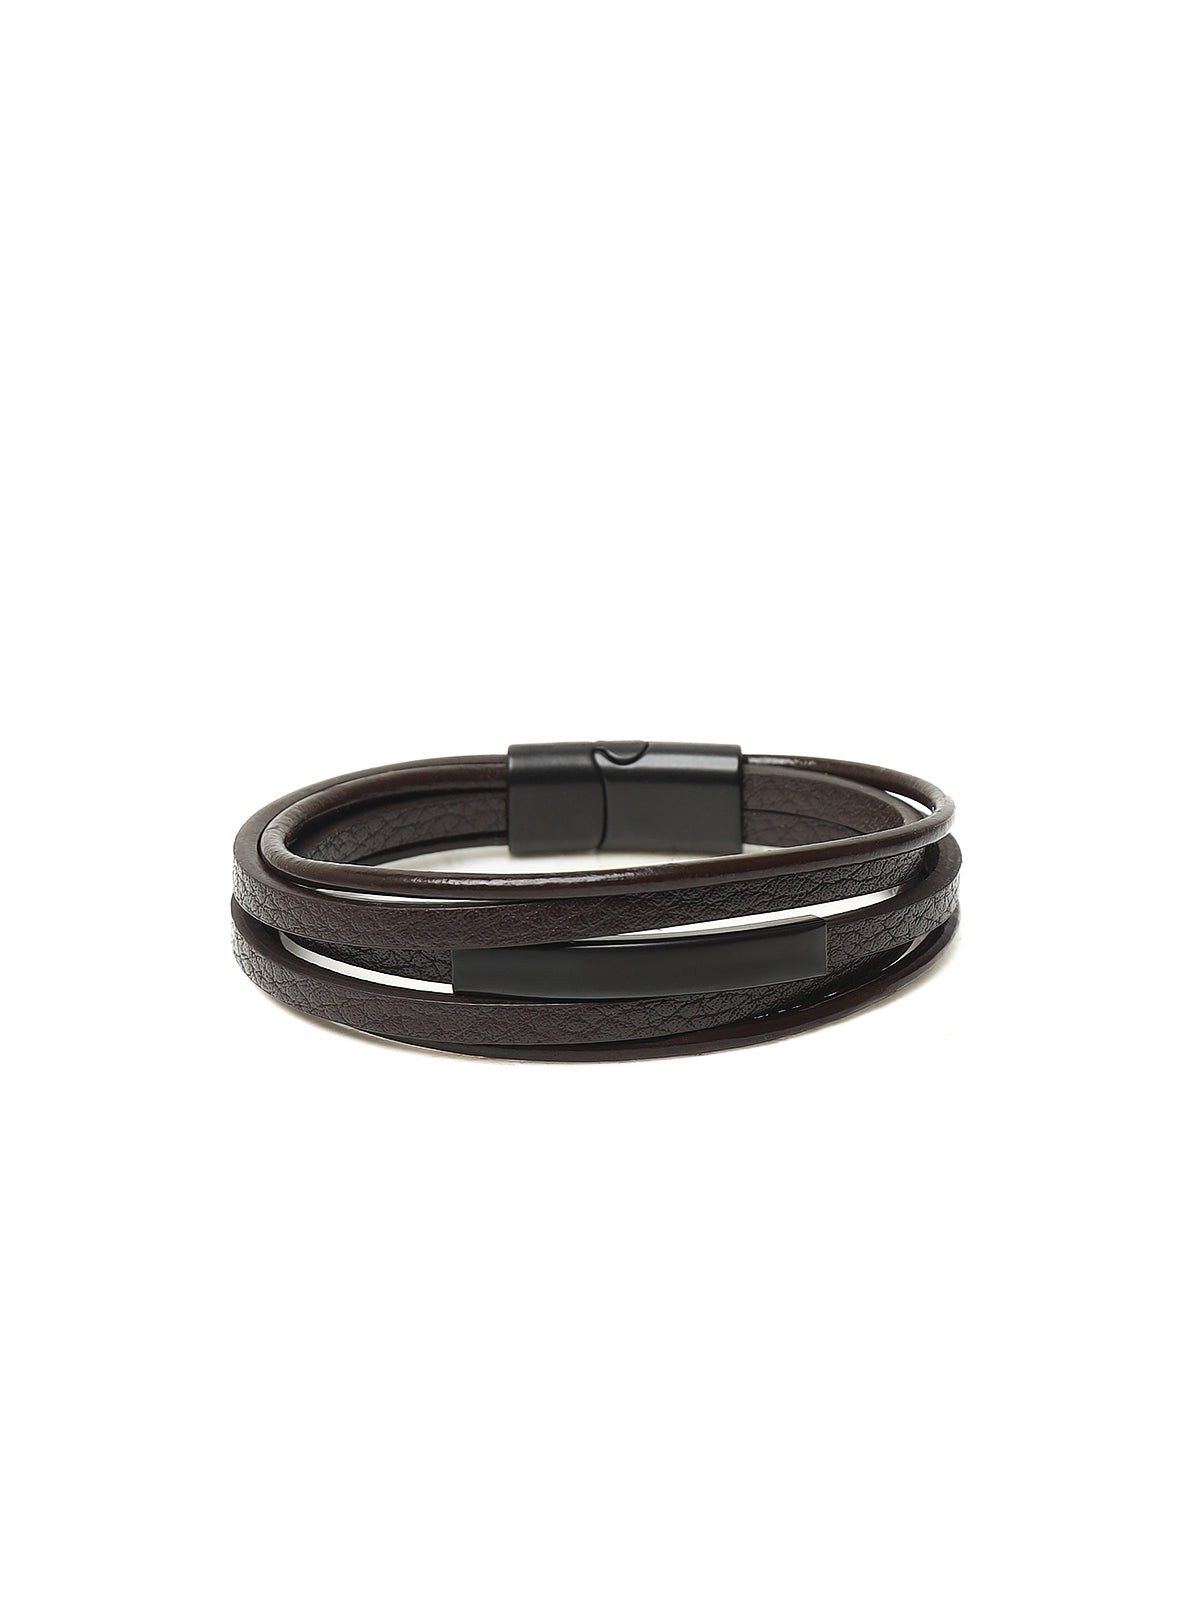 Dark Brown Leather Bracelet - FABR24-015